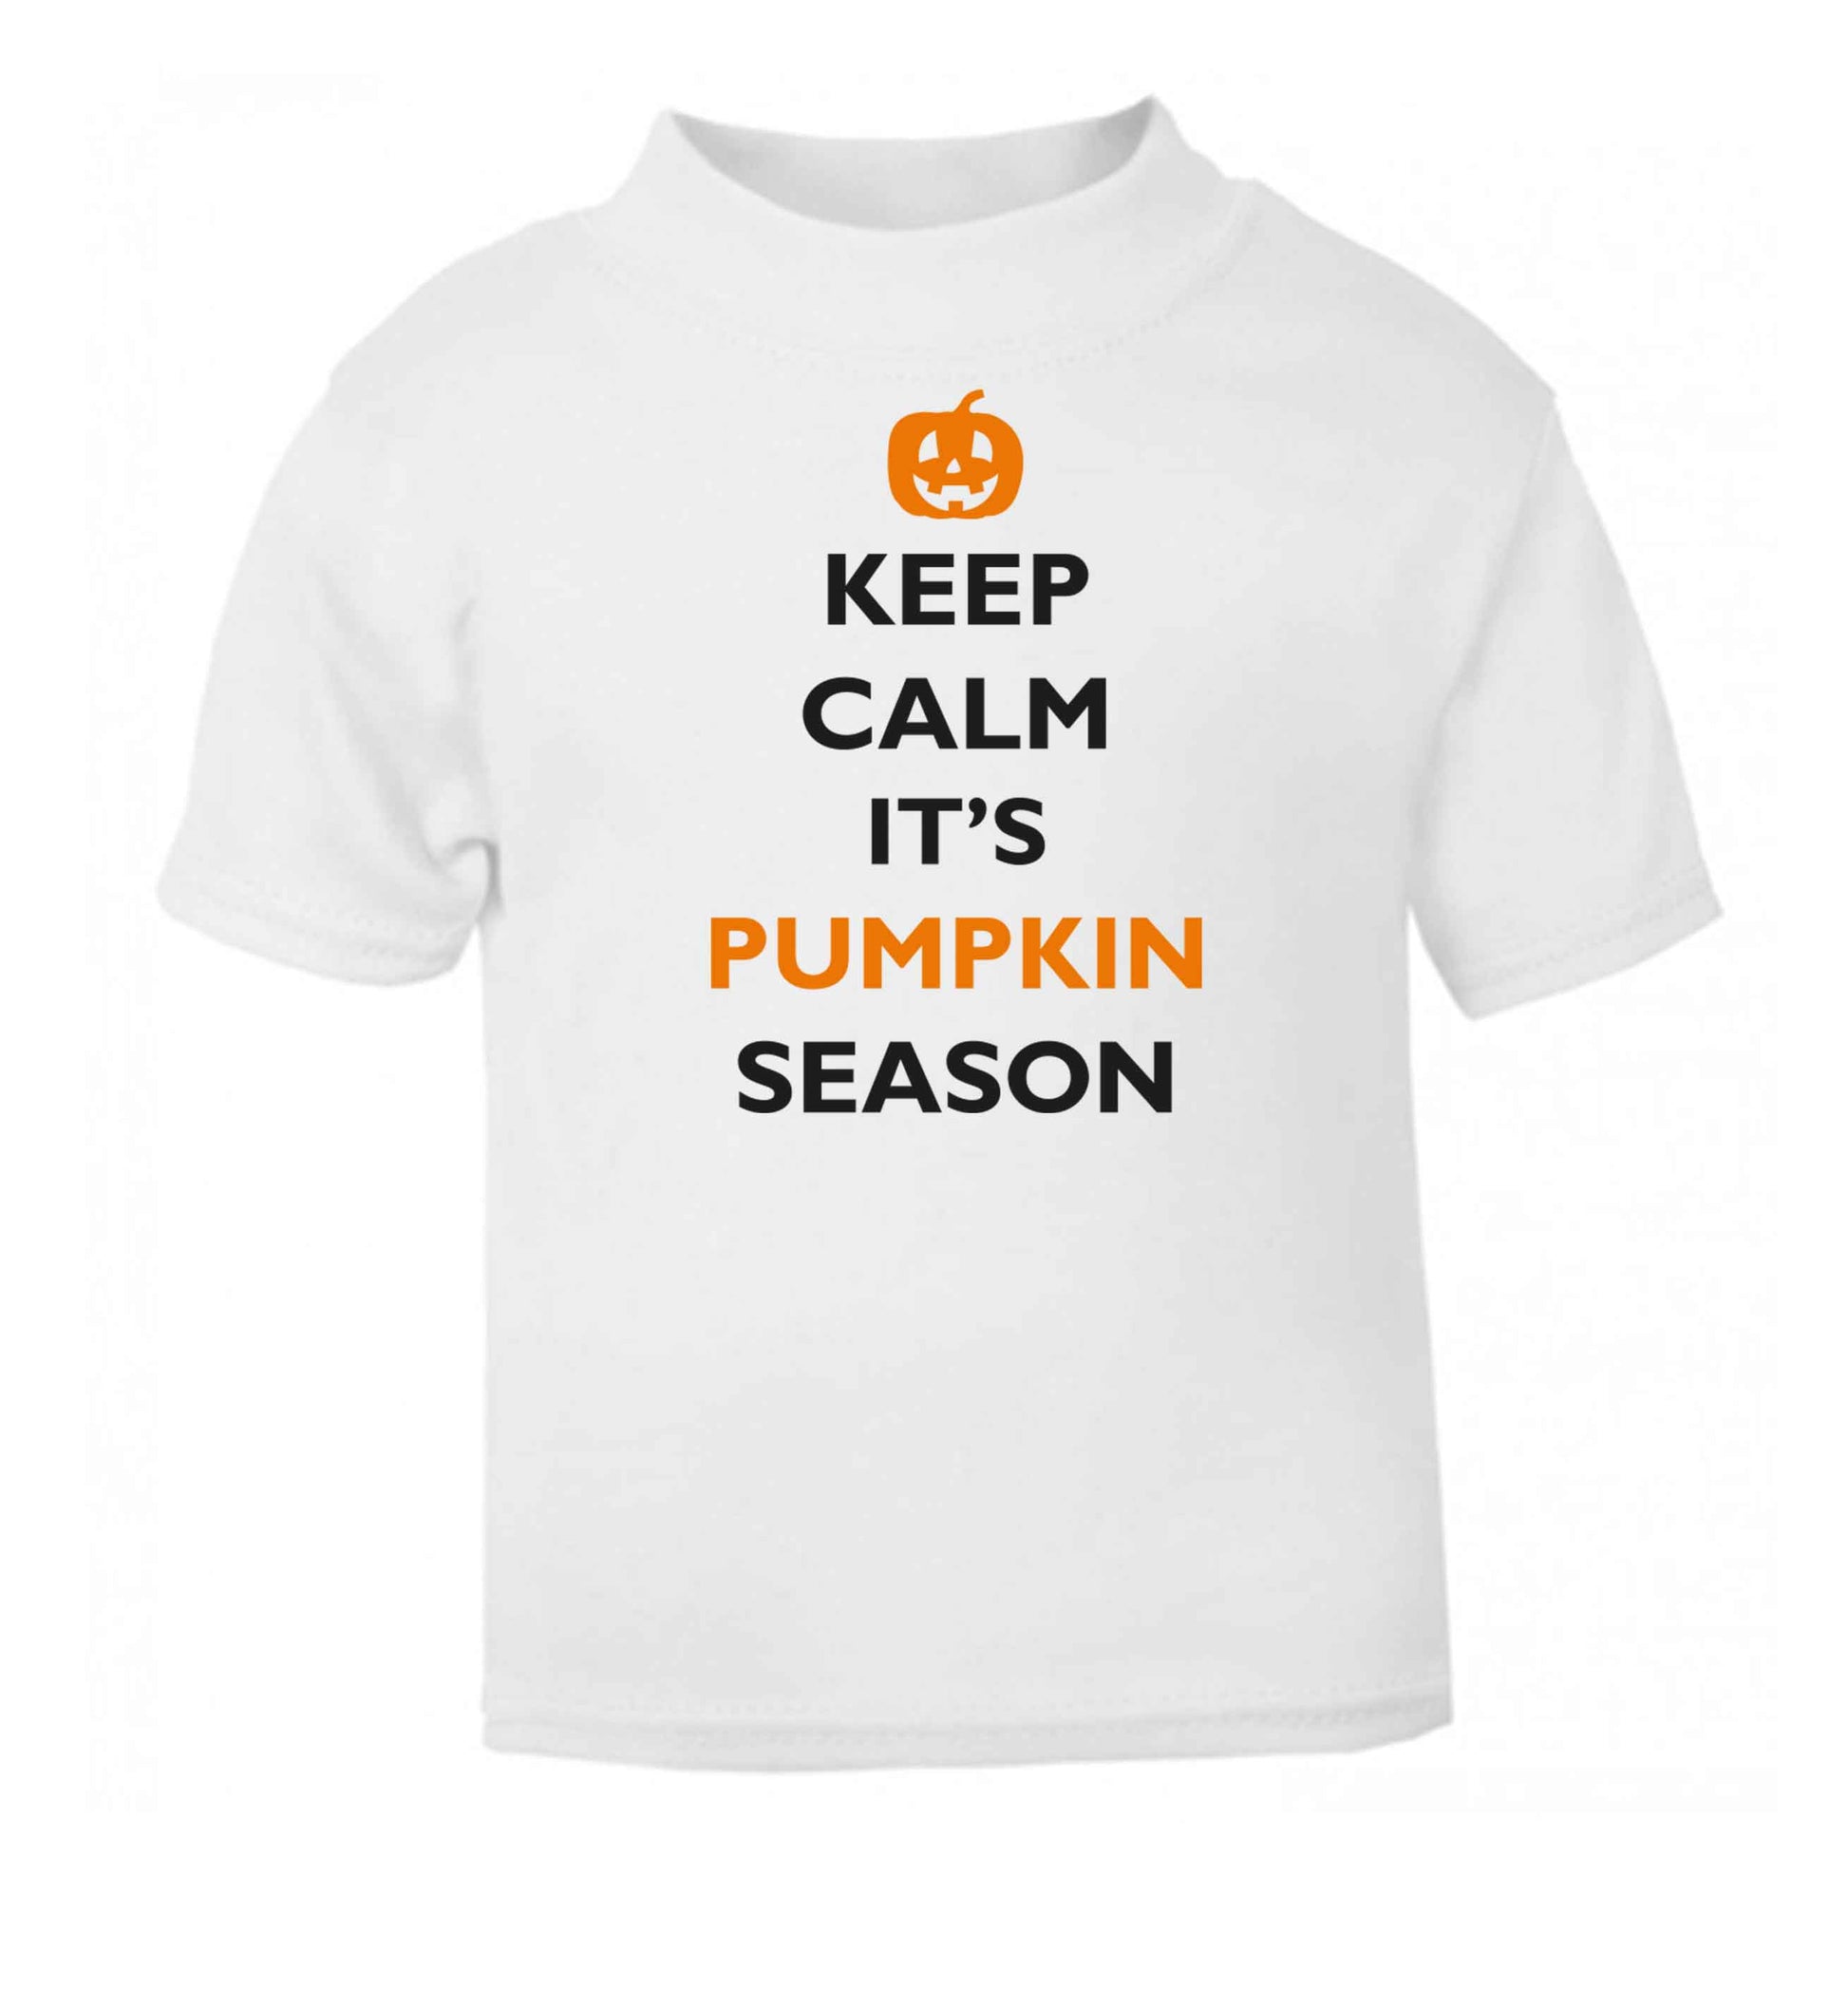 Calm Pumpkin Season white baby toddler Tshirt 2 Years